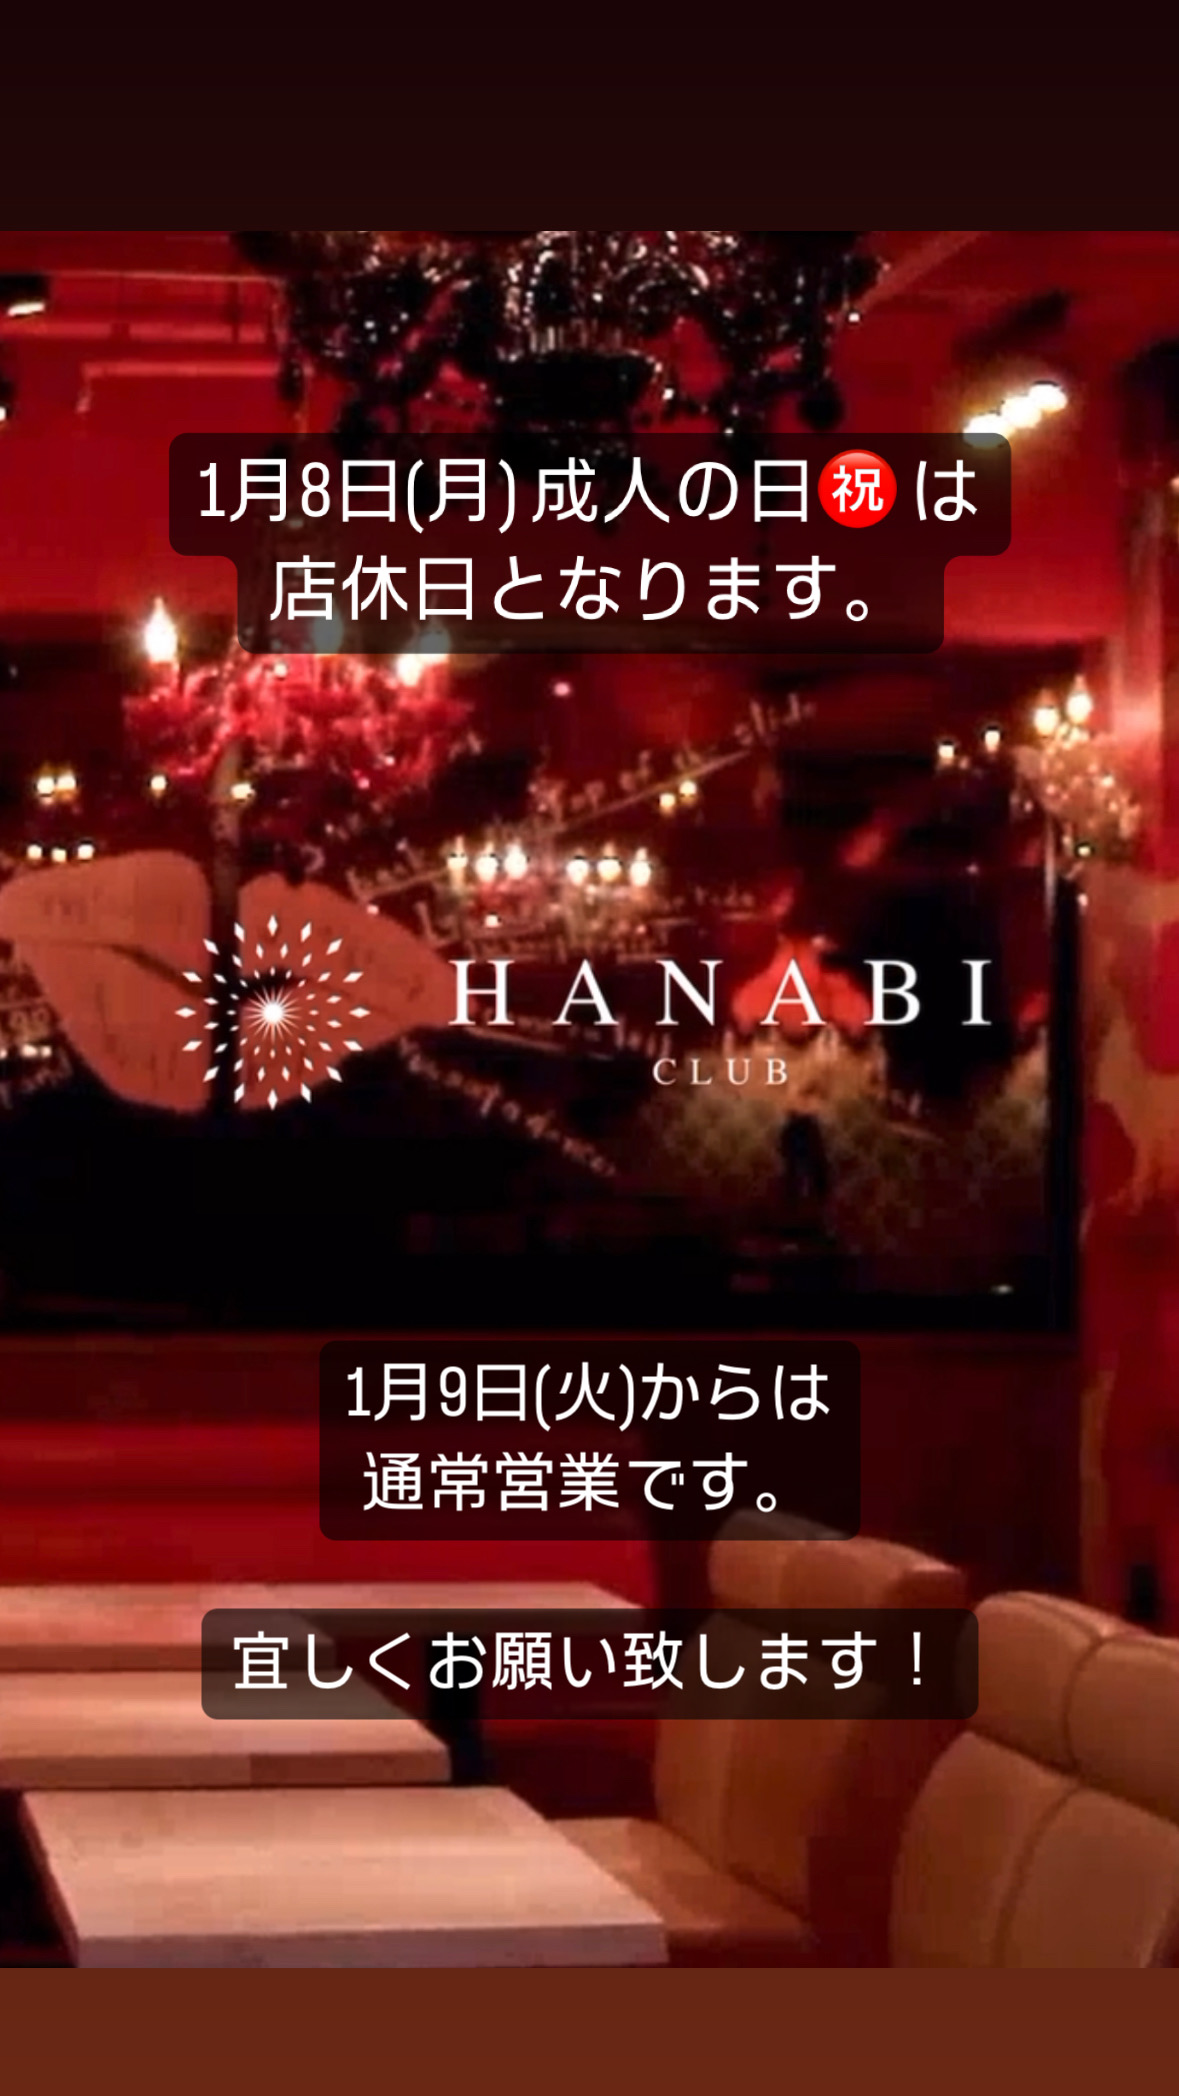 EVENT-【店休日のお知らせ】（HANABI）